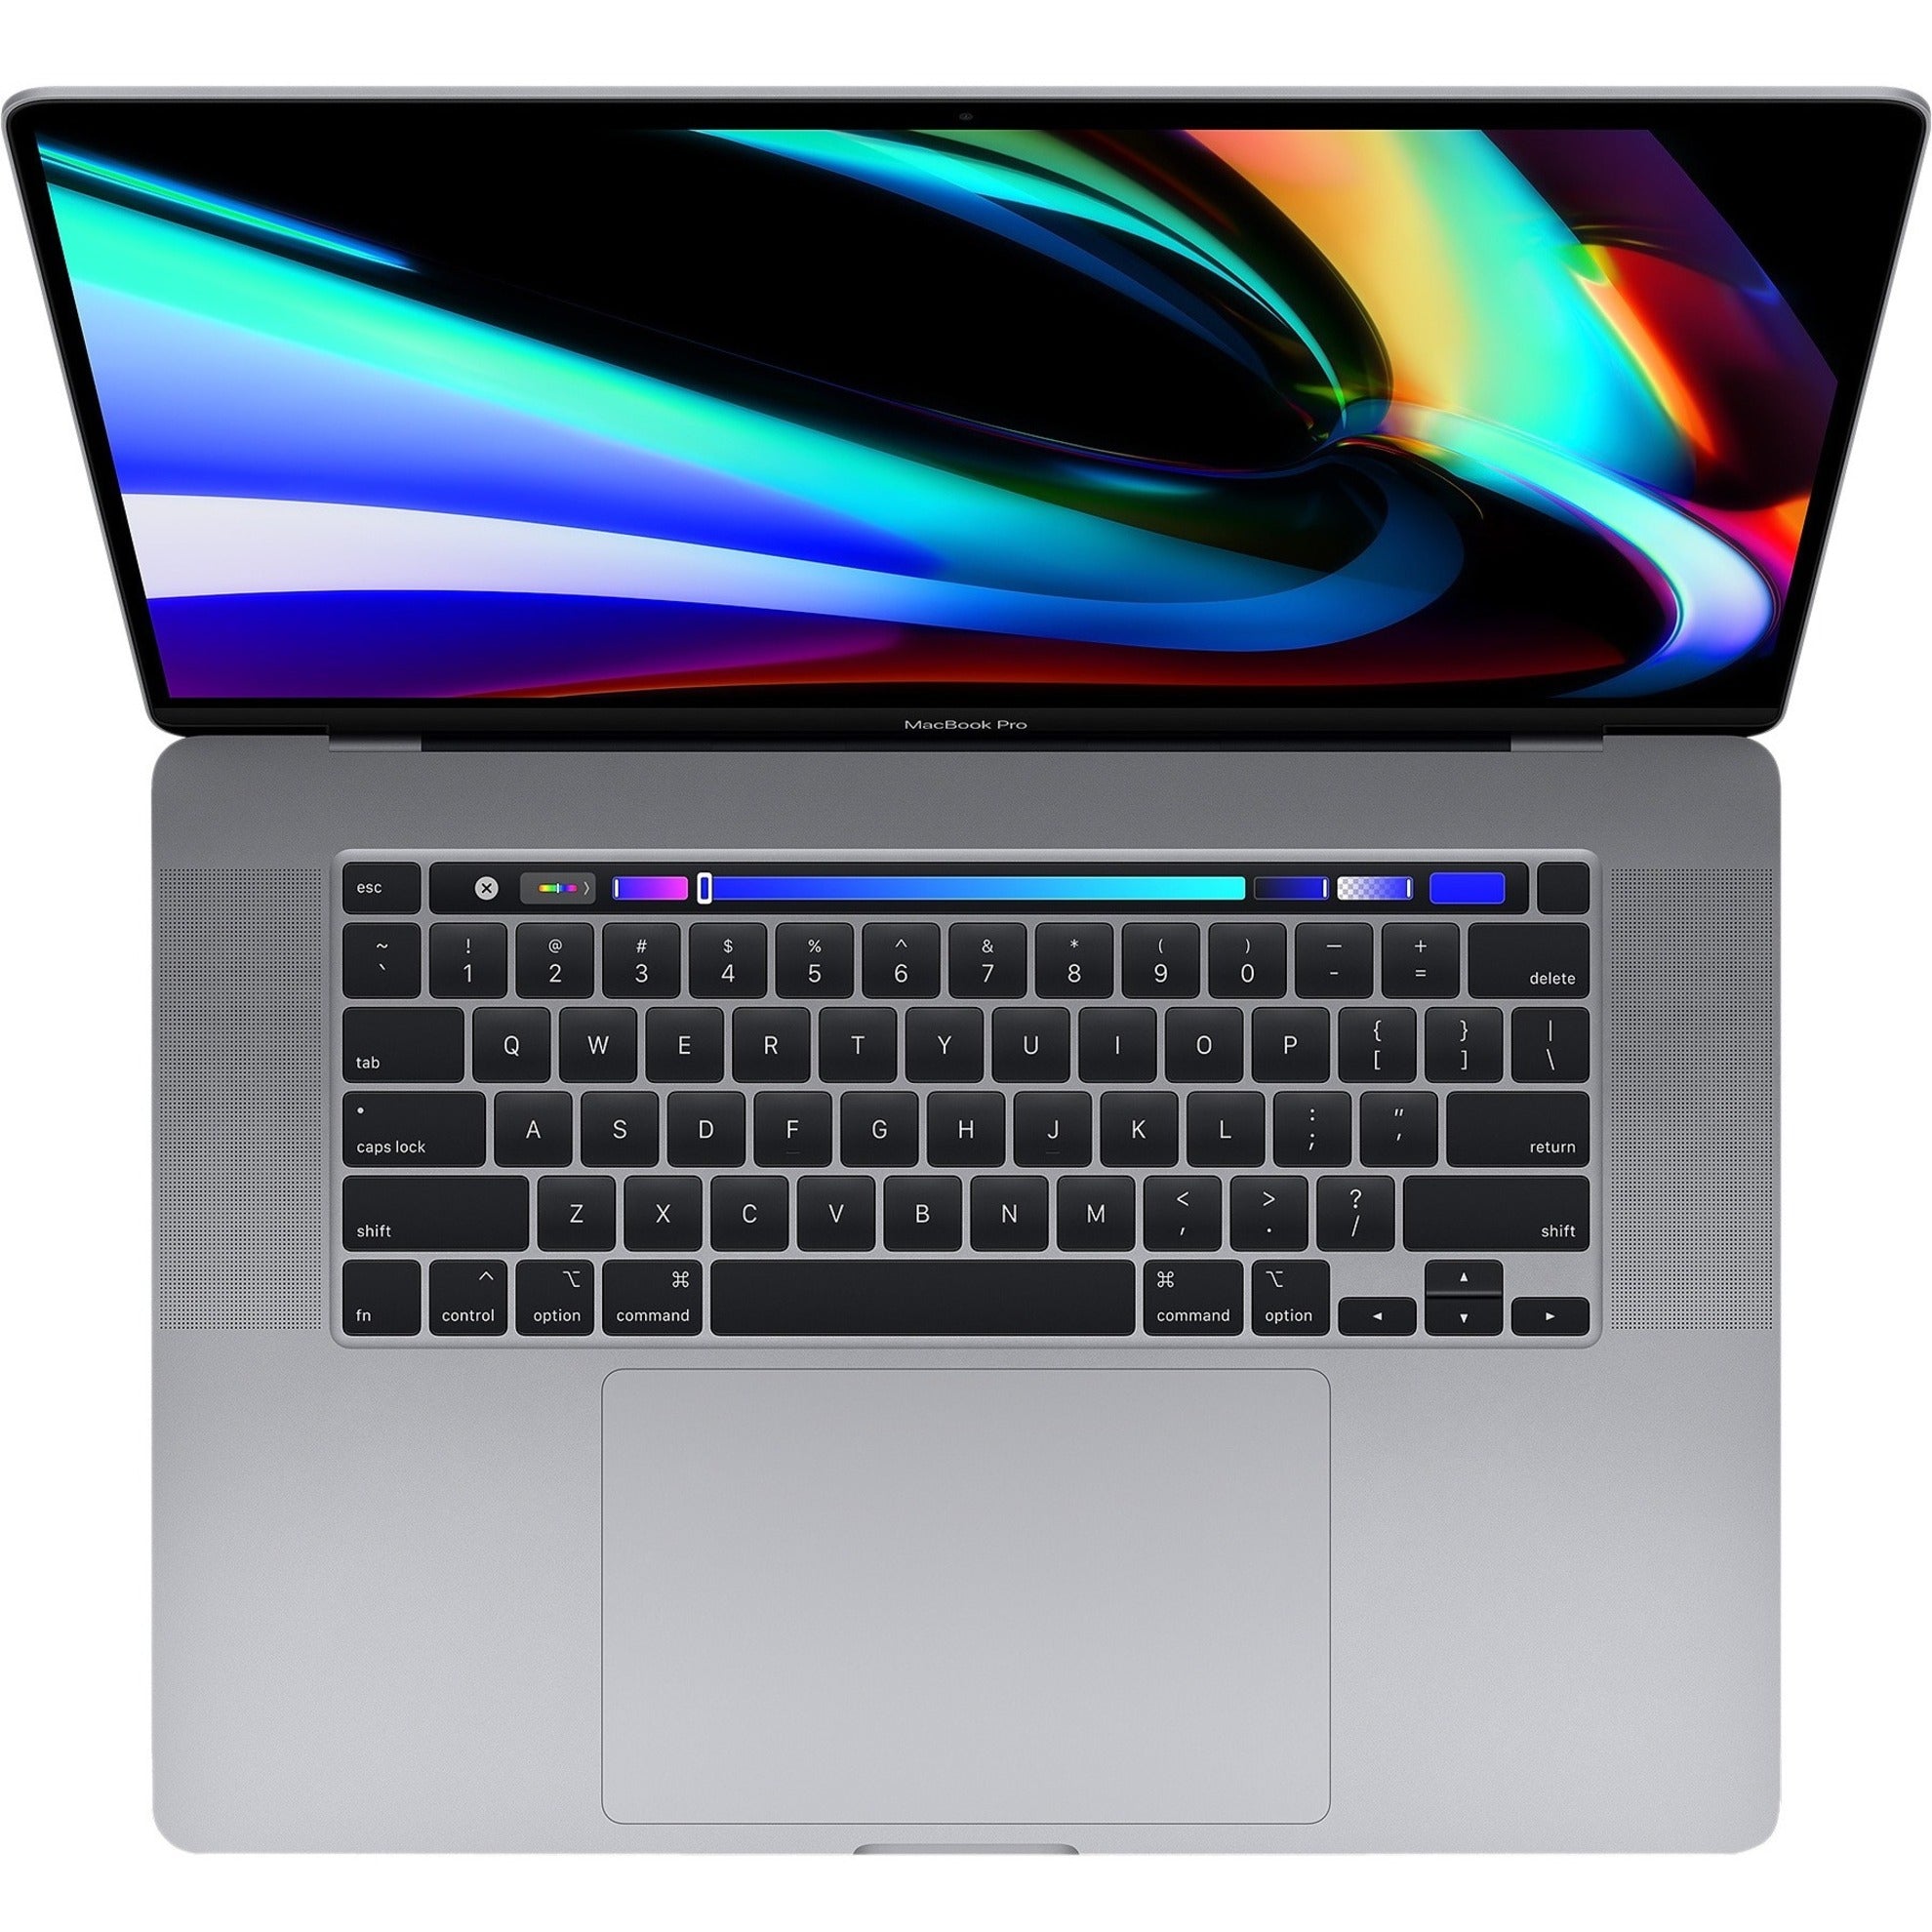 Apple MVVJ2LL/A MacBook Pro 16-inch Space Gray, 2.6GHz 6-Core i7, 16GB RAM, 512GB SSD